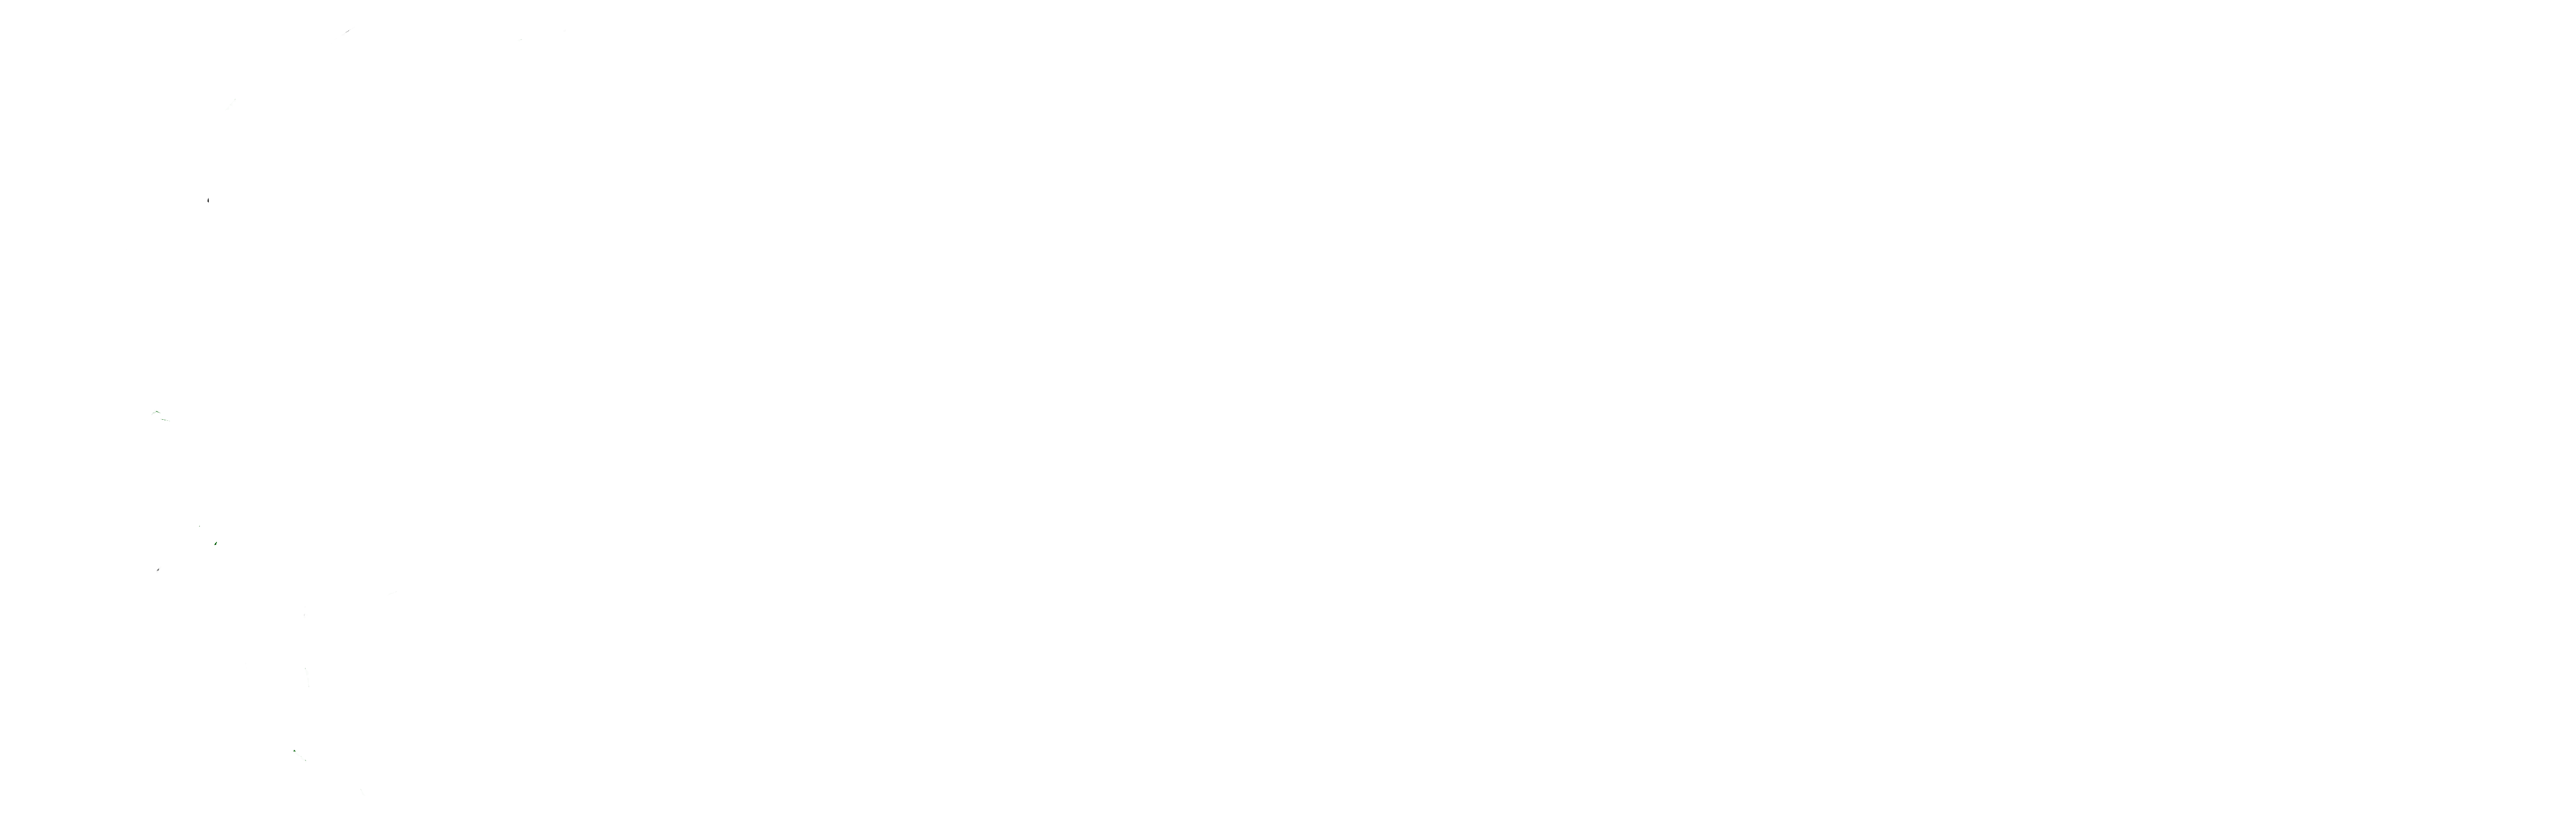 Elastotop Bird Control